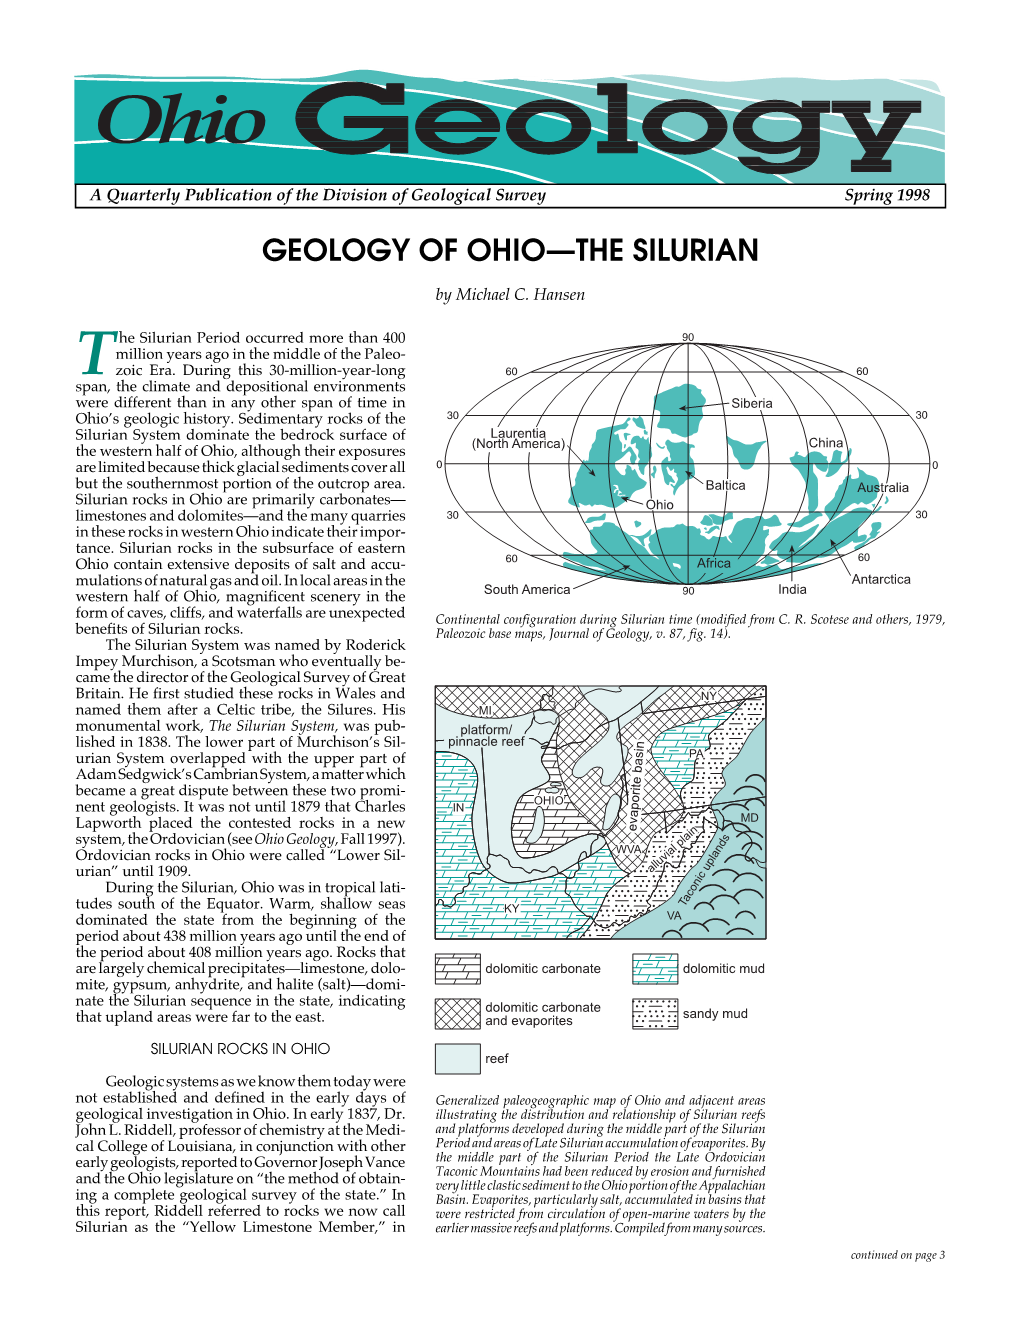 Geology of Ohio—The Silurian